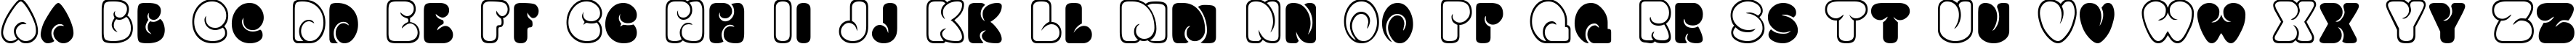 Пример написания английского алфавита шрифтом FK Alfonco.kz